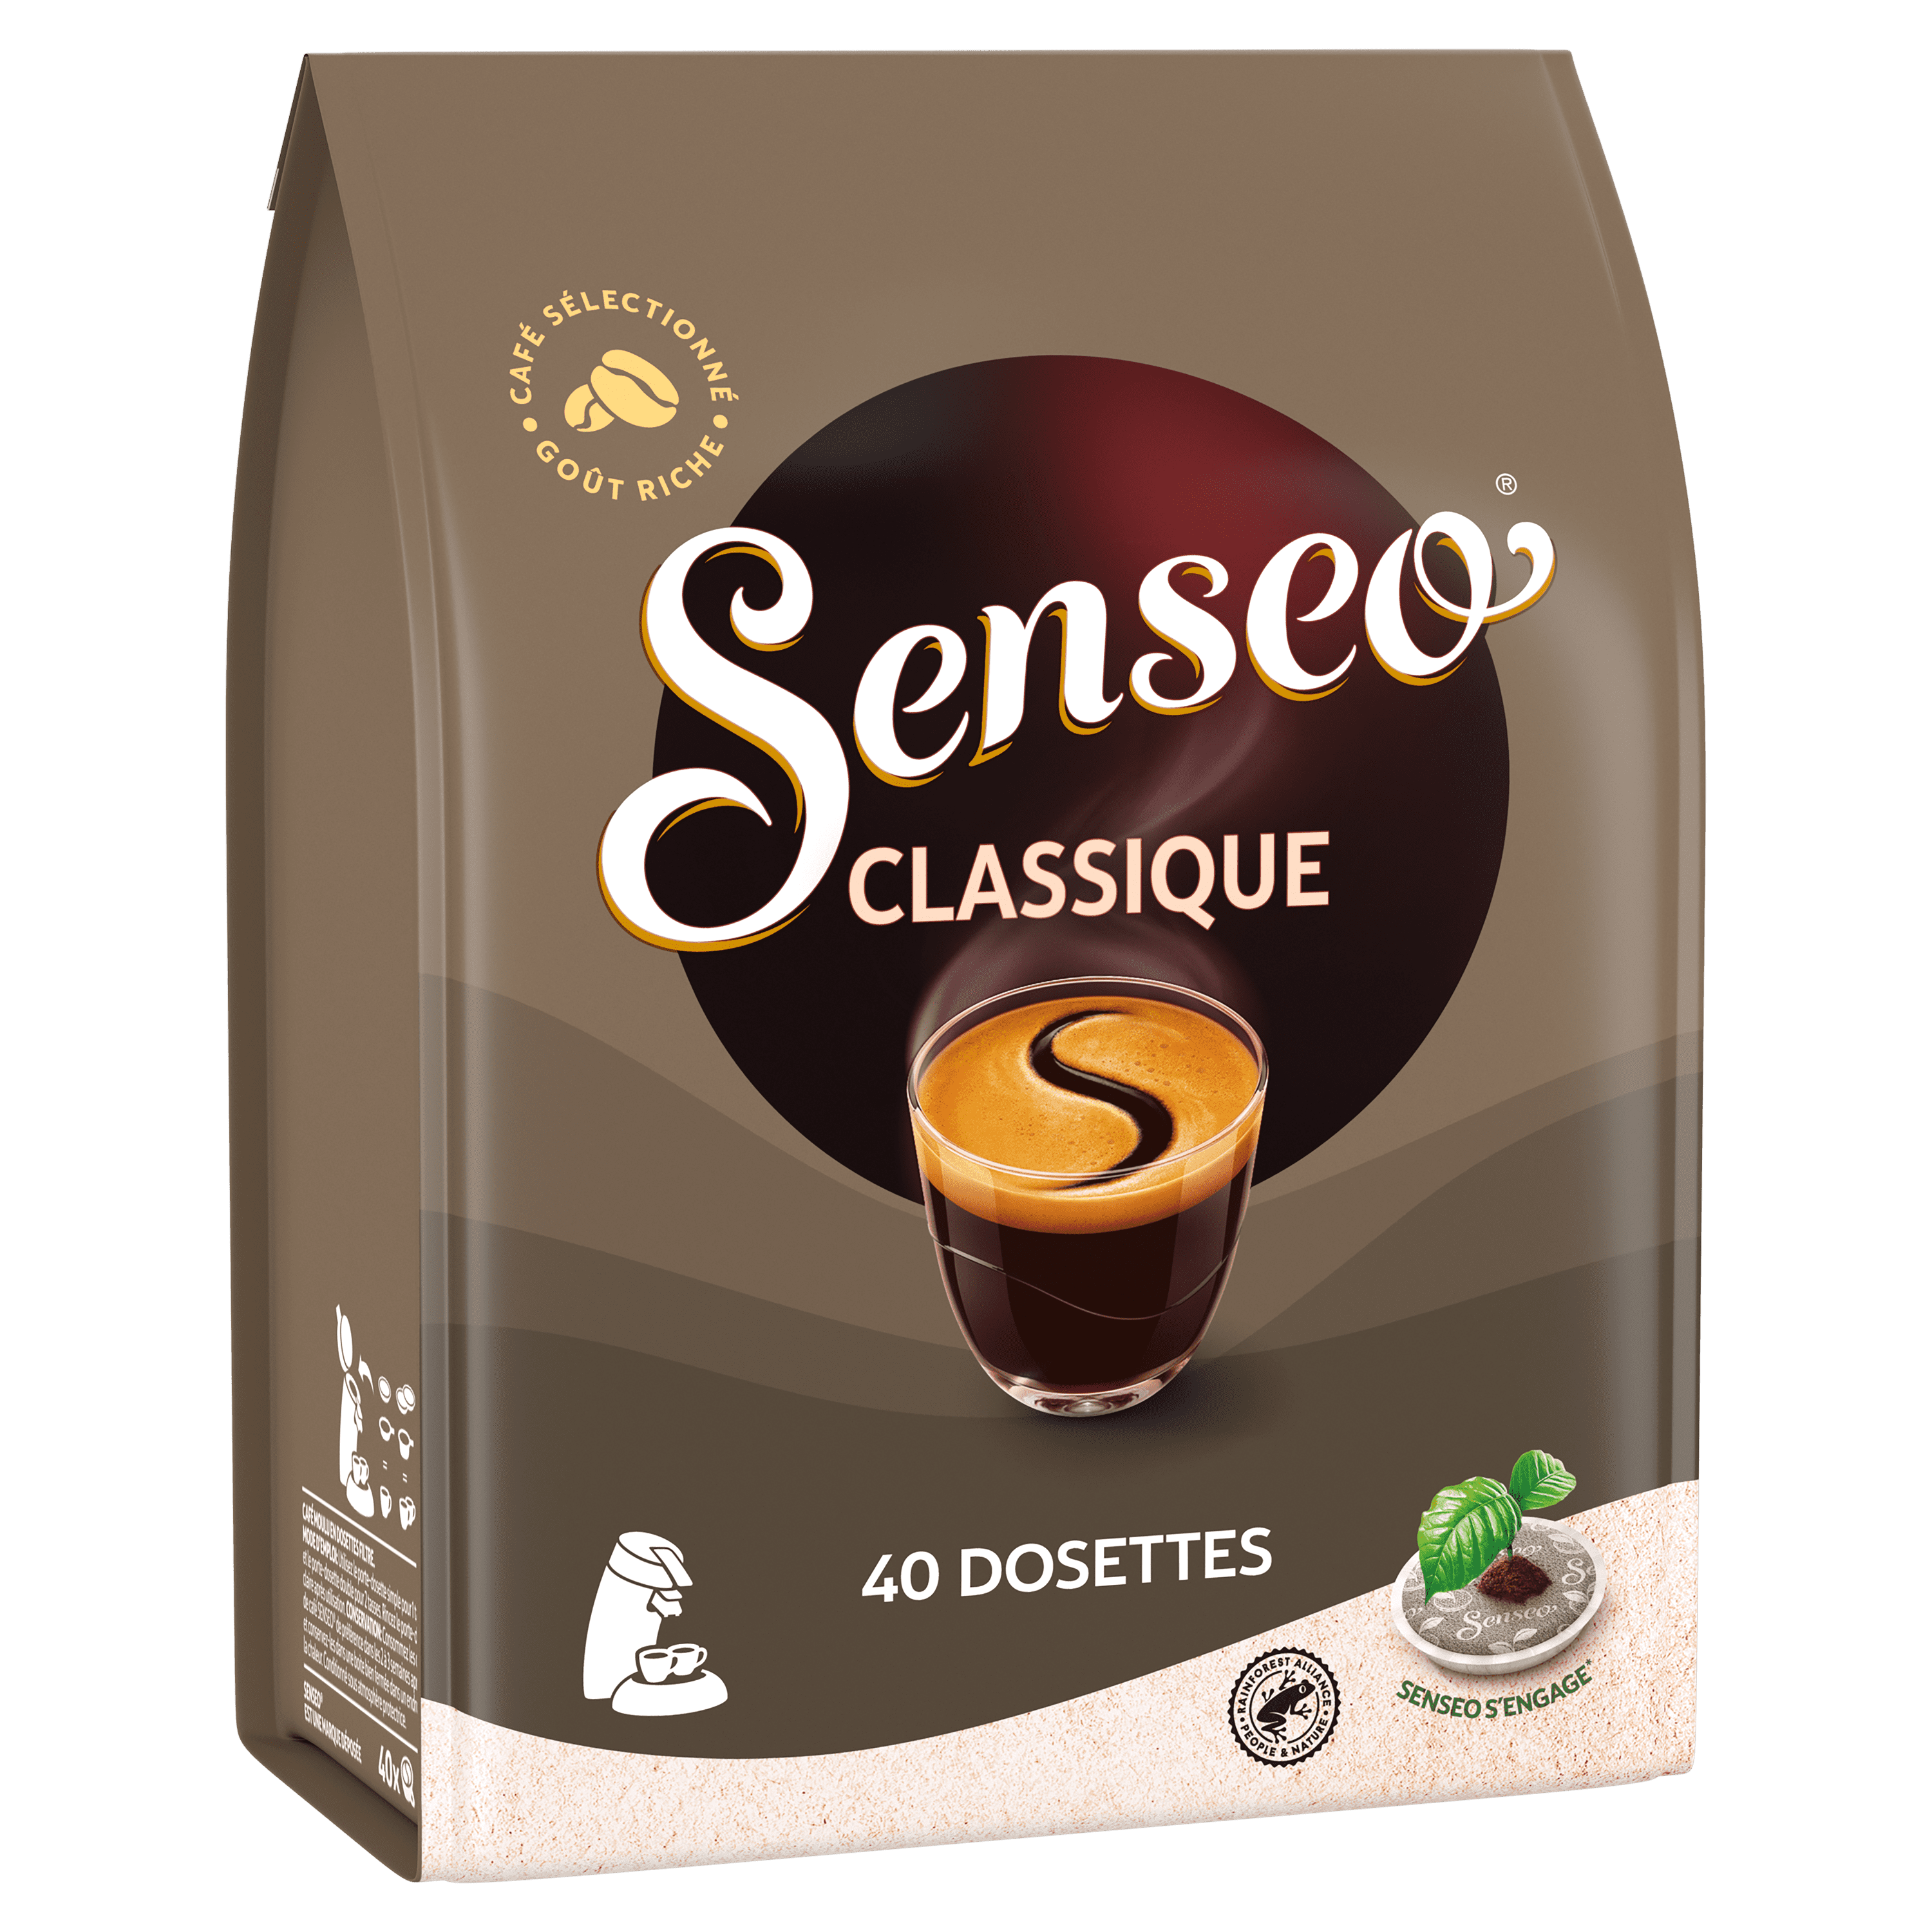 Dosettes de café Senseo Doux - Paquet de 54 sur